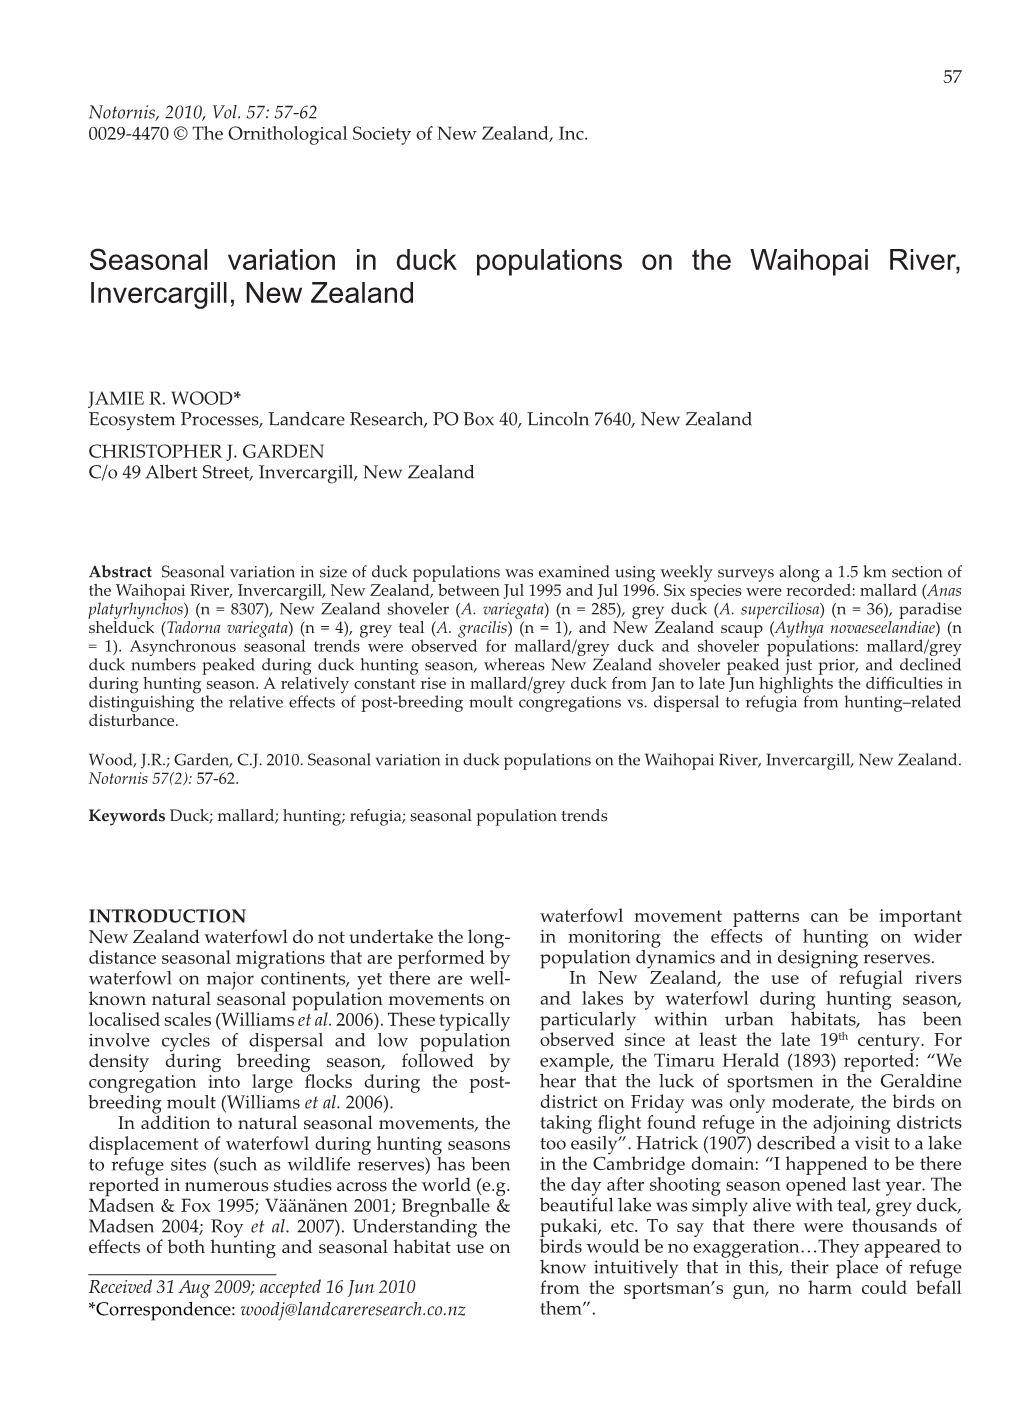 Seasonal Variation in Duck Populations on the Waihopai River, Invercargill, New Zealand